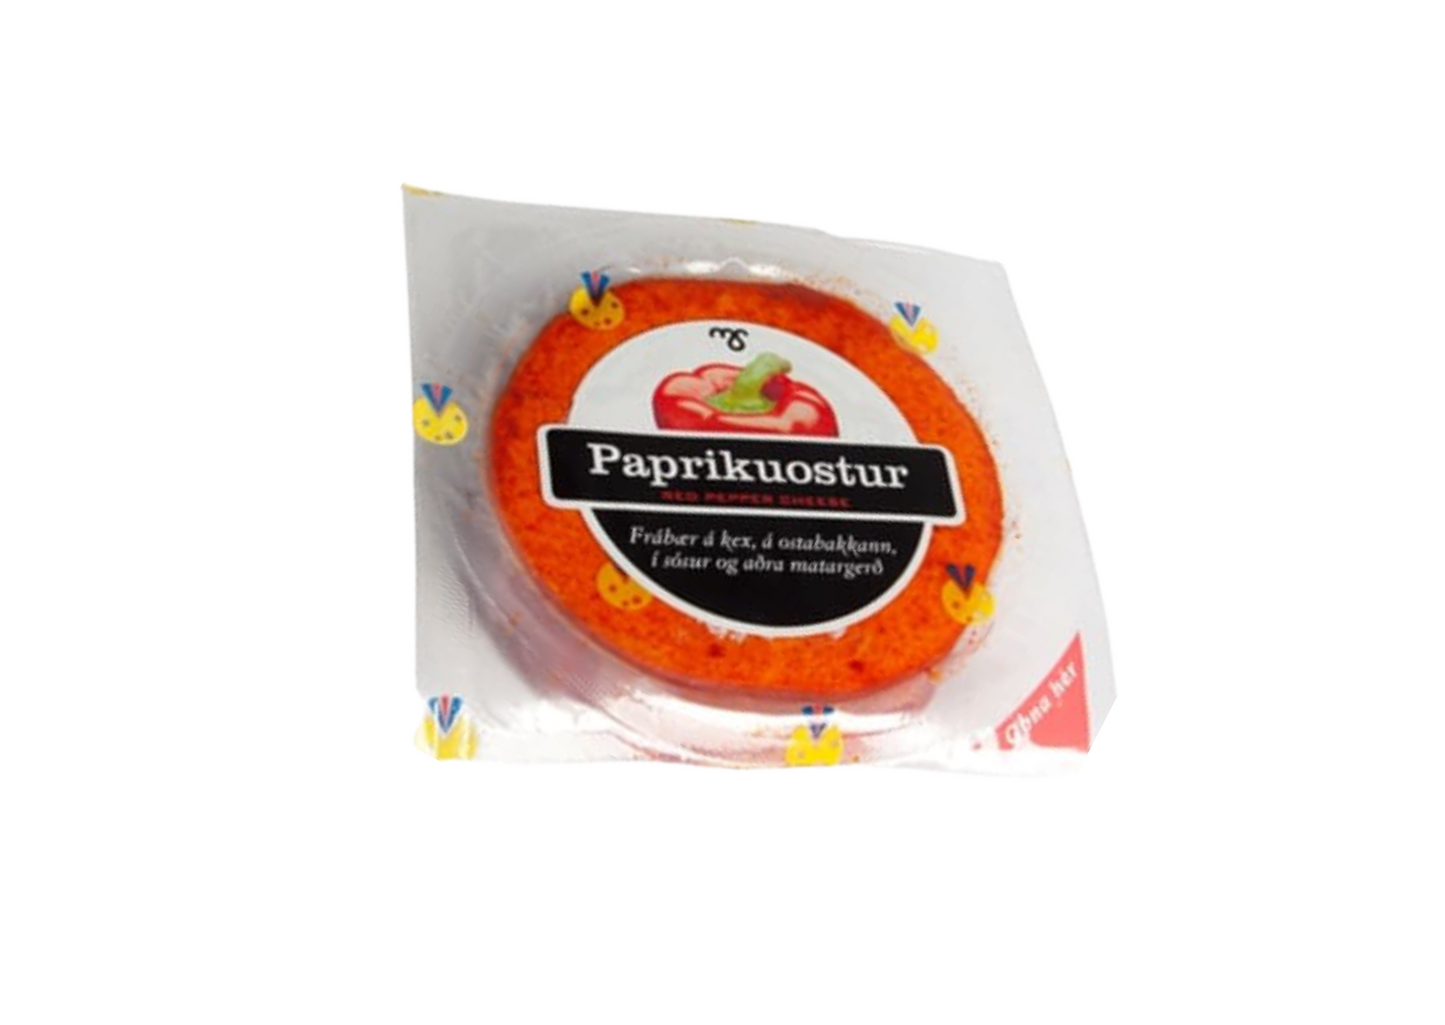 Icelandic cheese - Paprikuostur (paprika cheese).